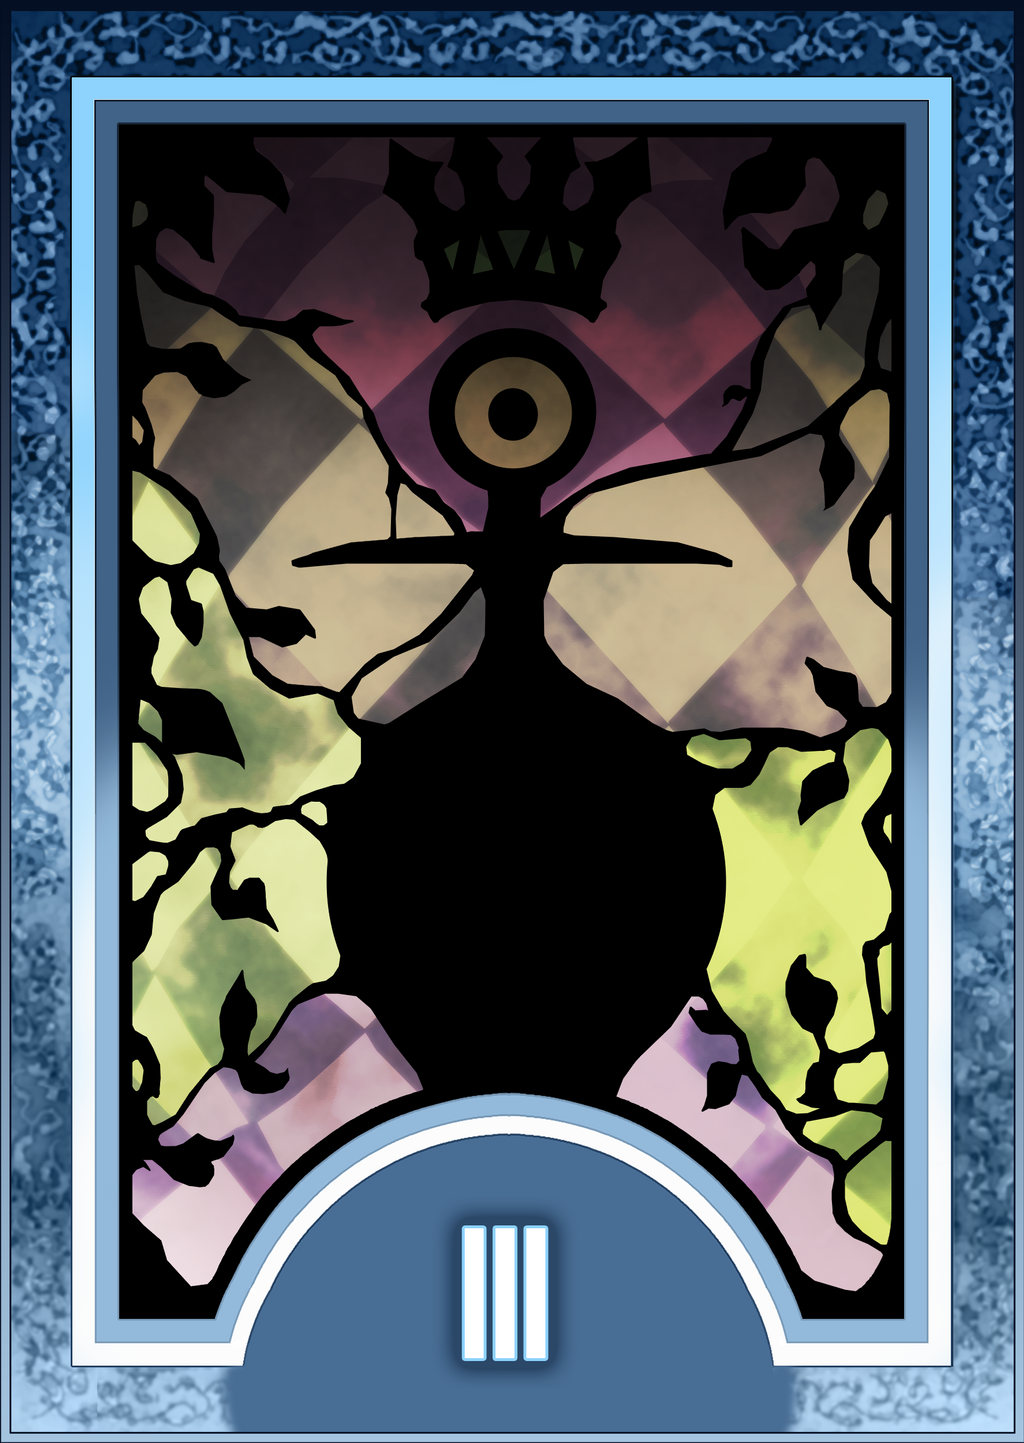 Persona 3/4 Tarot Card Deck HR - Empress Arcana by Enetirnel on DeviantArt